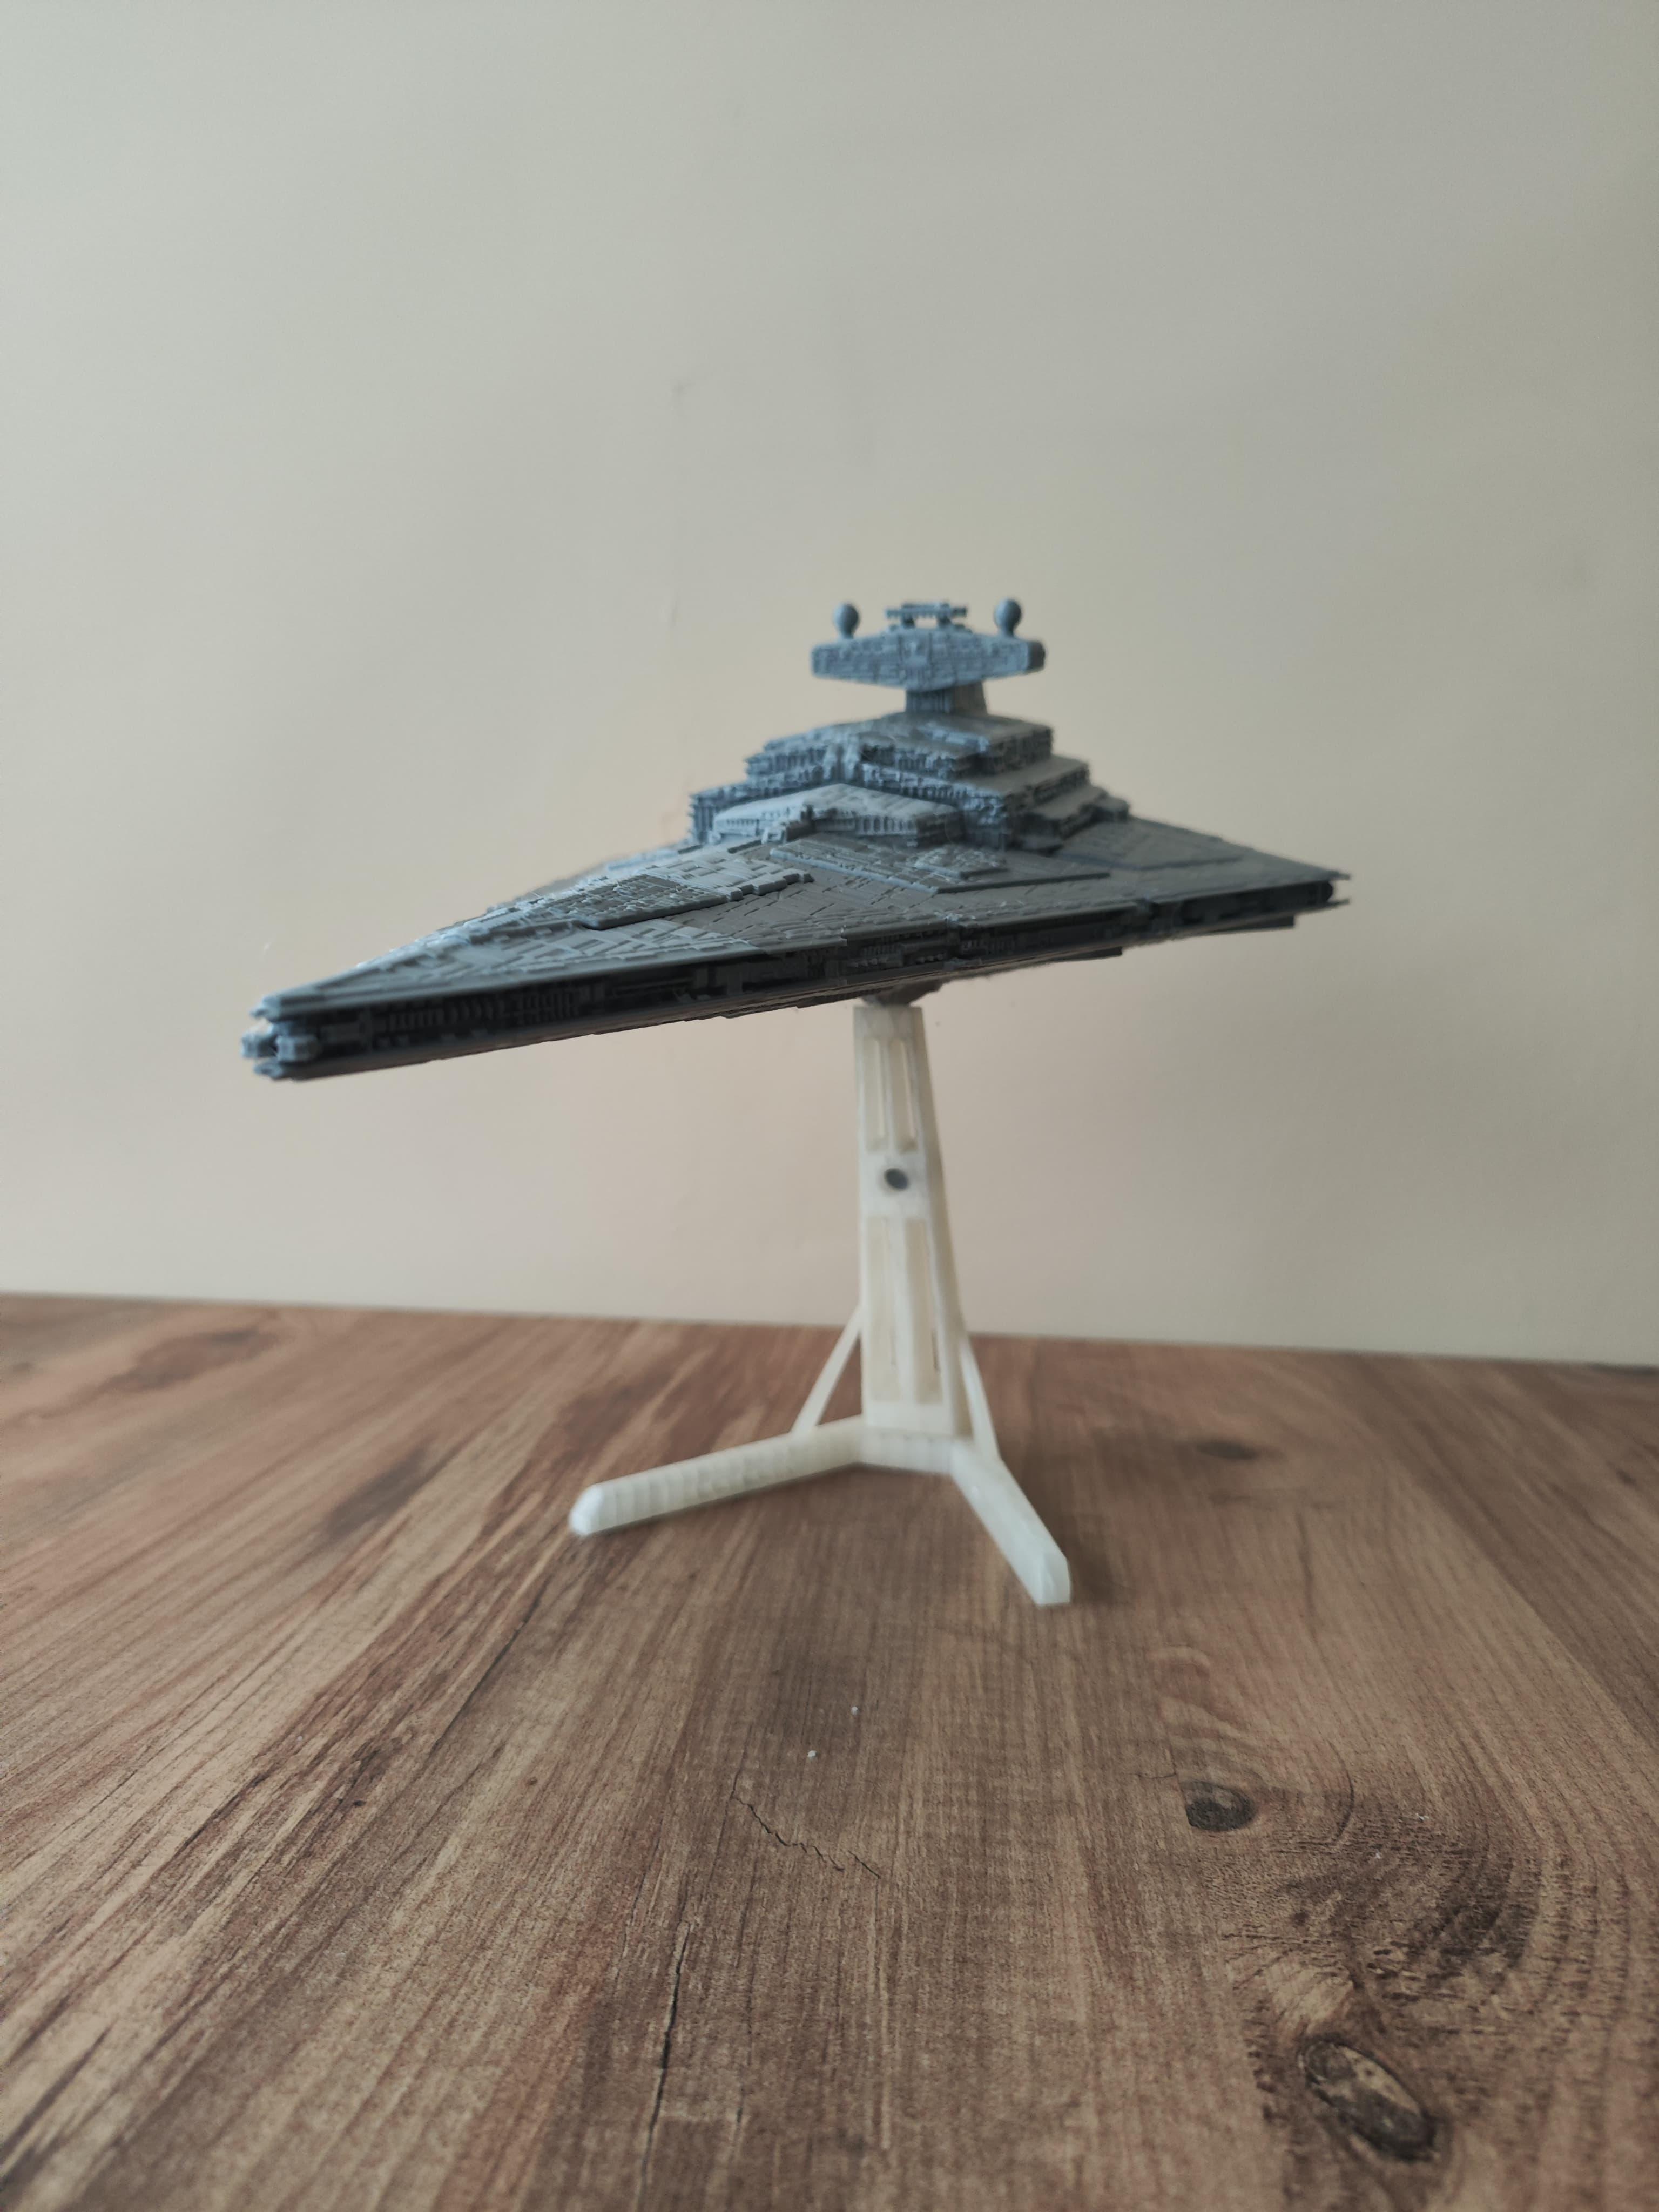 Display_stand_for_Star_destroyer 3d model